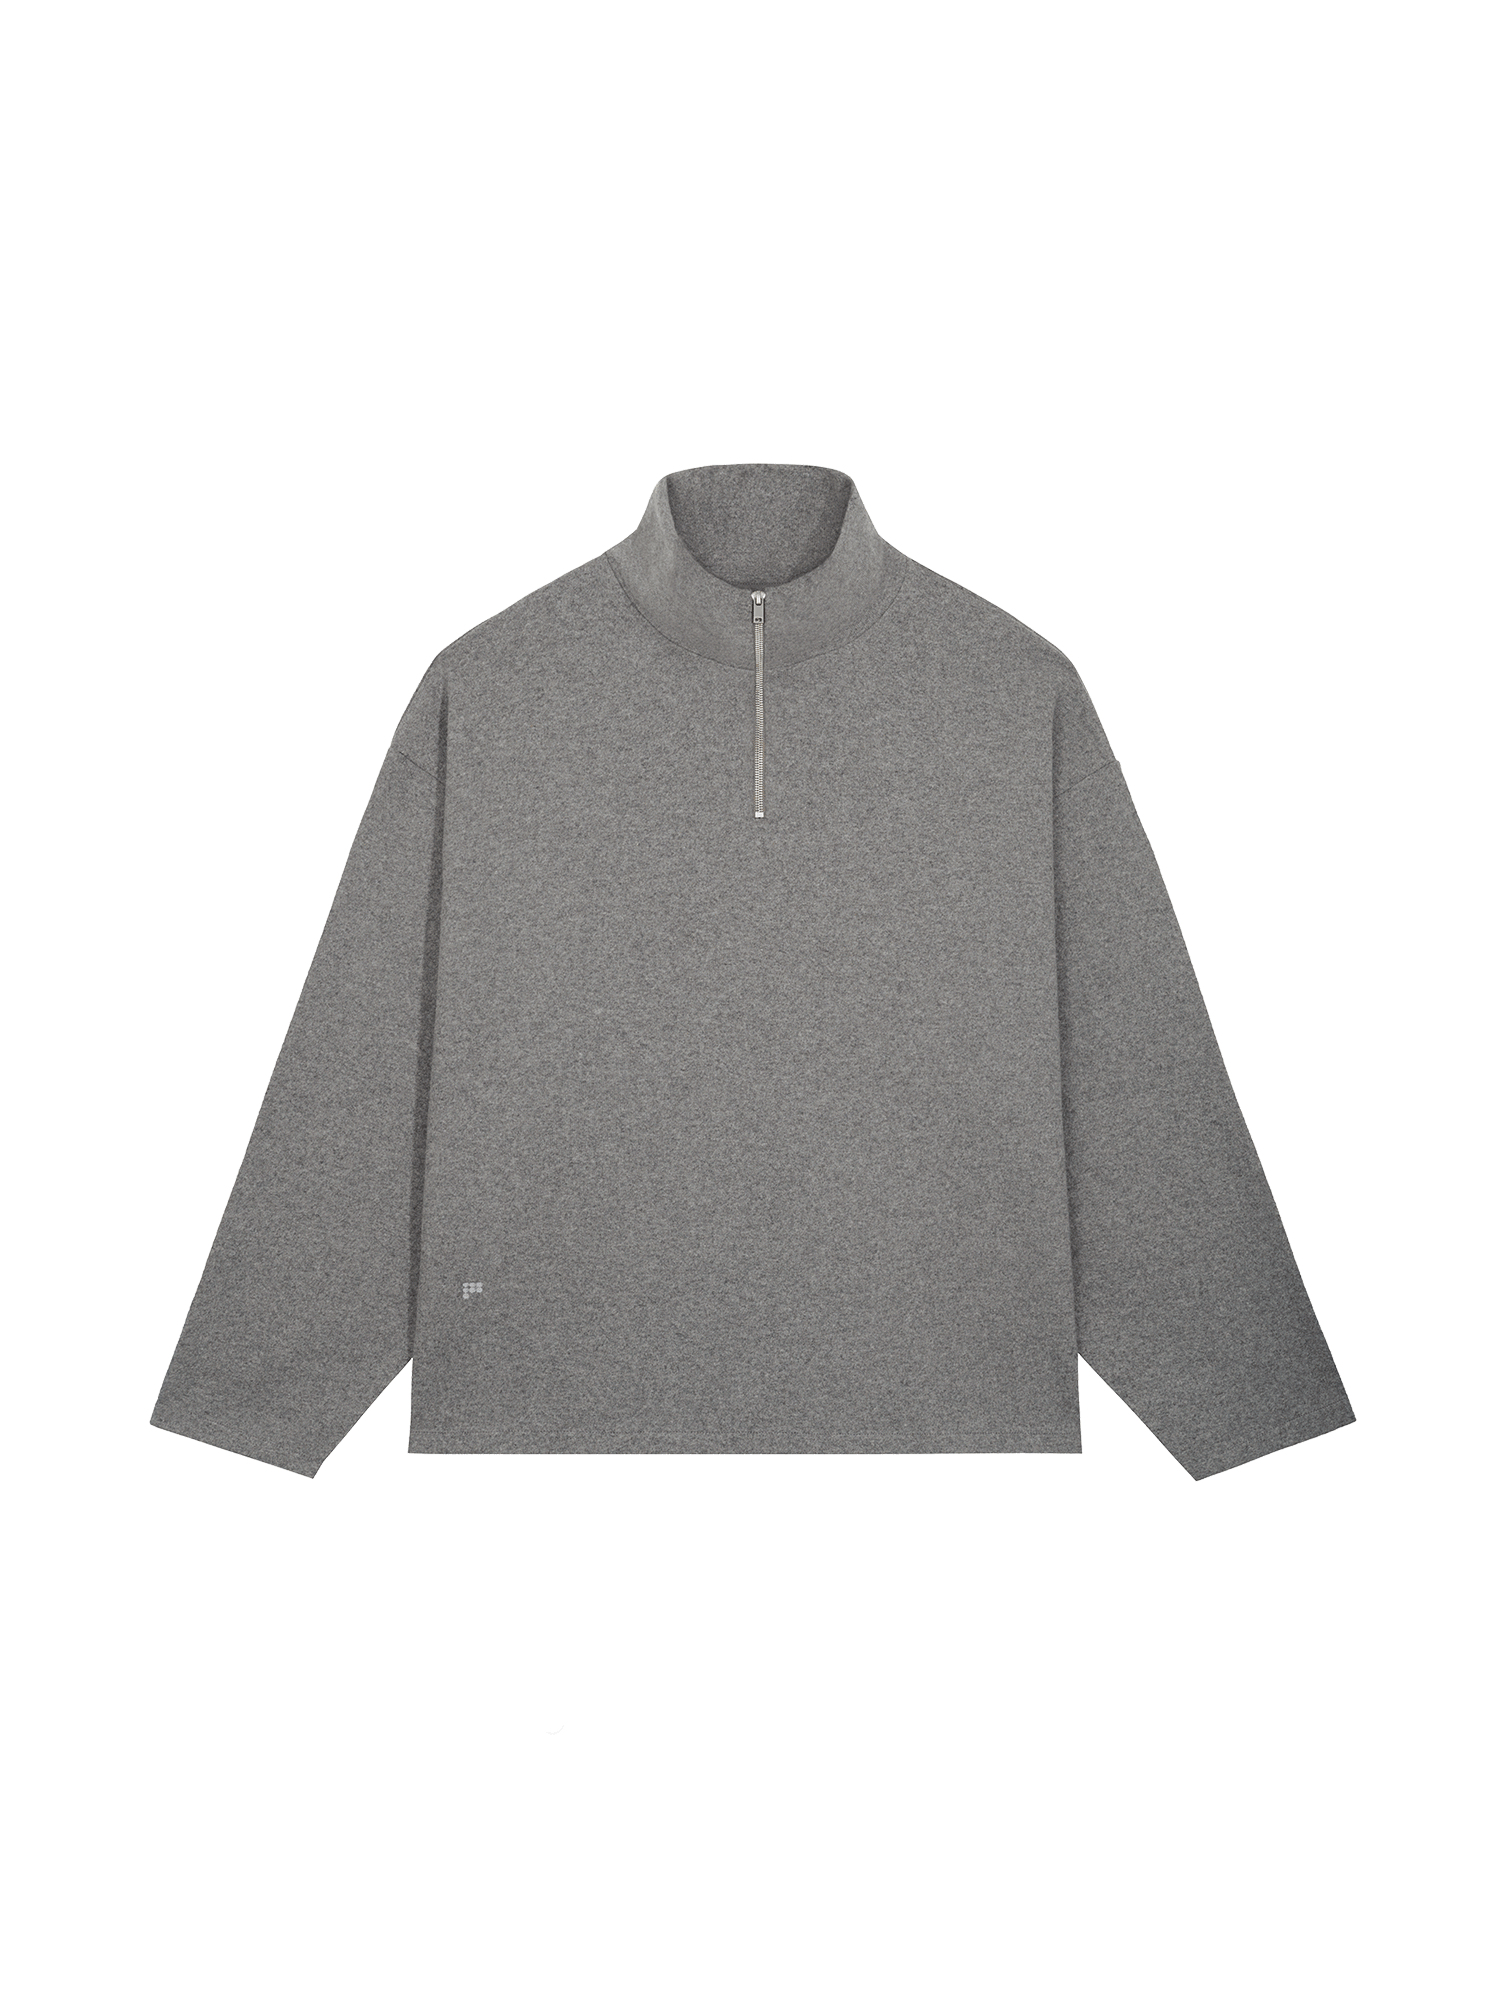 PANGAIA - Women's Recycled Wool Jersey Half-Zip Sweater - volcanic grey L